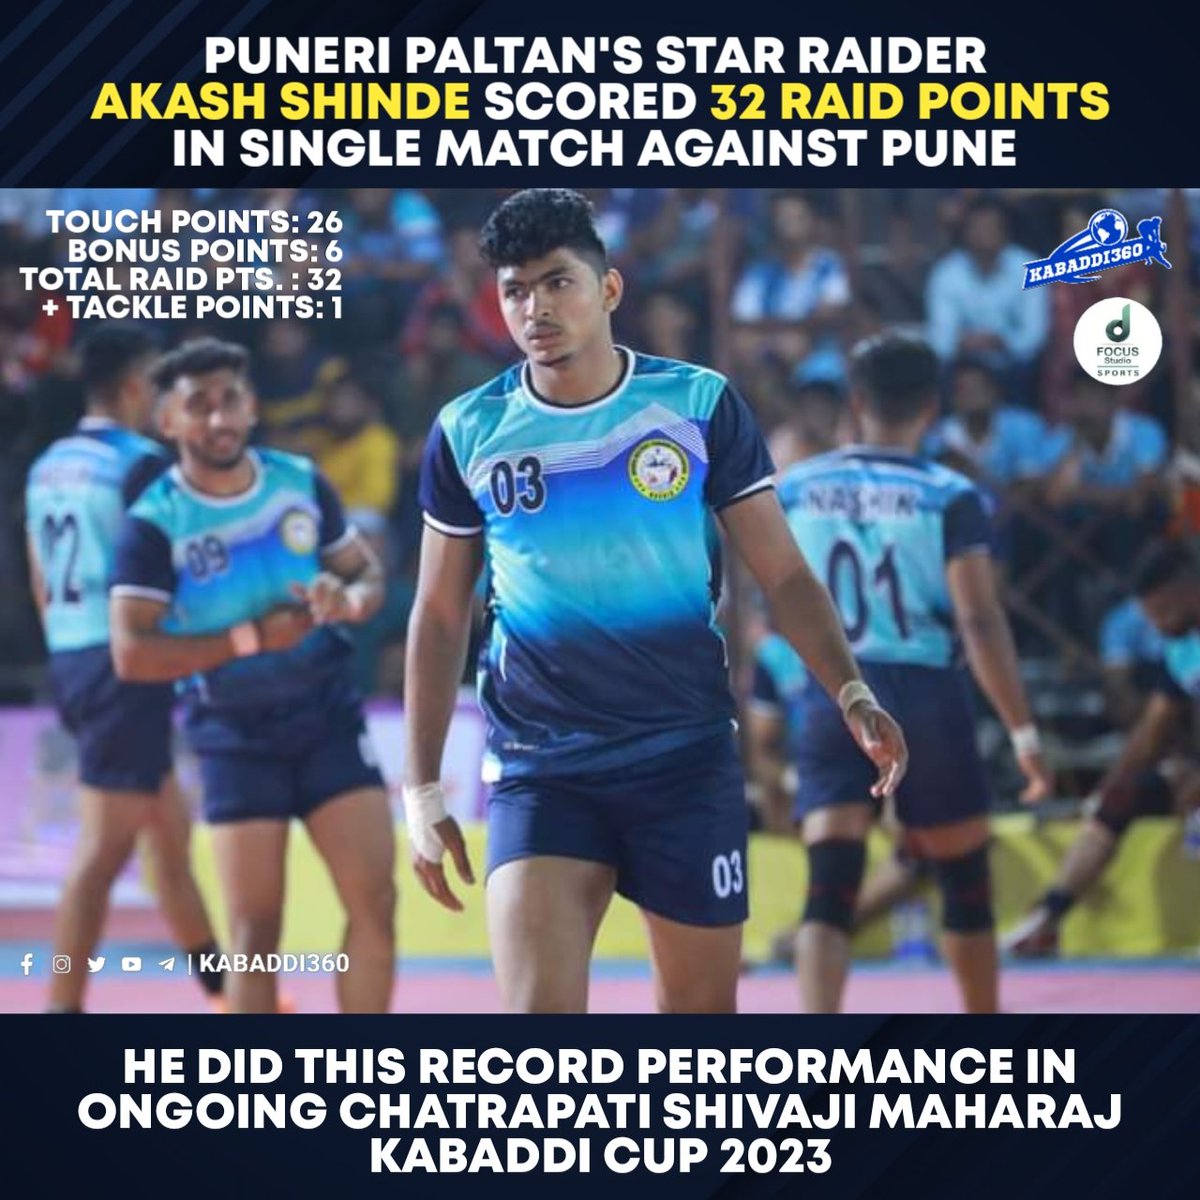 Akash is Playing for His district Nashik & has given this kind of performances before for his team many times.

Stats Source: @kabaddiera 

#Akashshinde 
#PuneriPaltan 
#NashikKabaddi
#kabaddi360